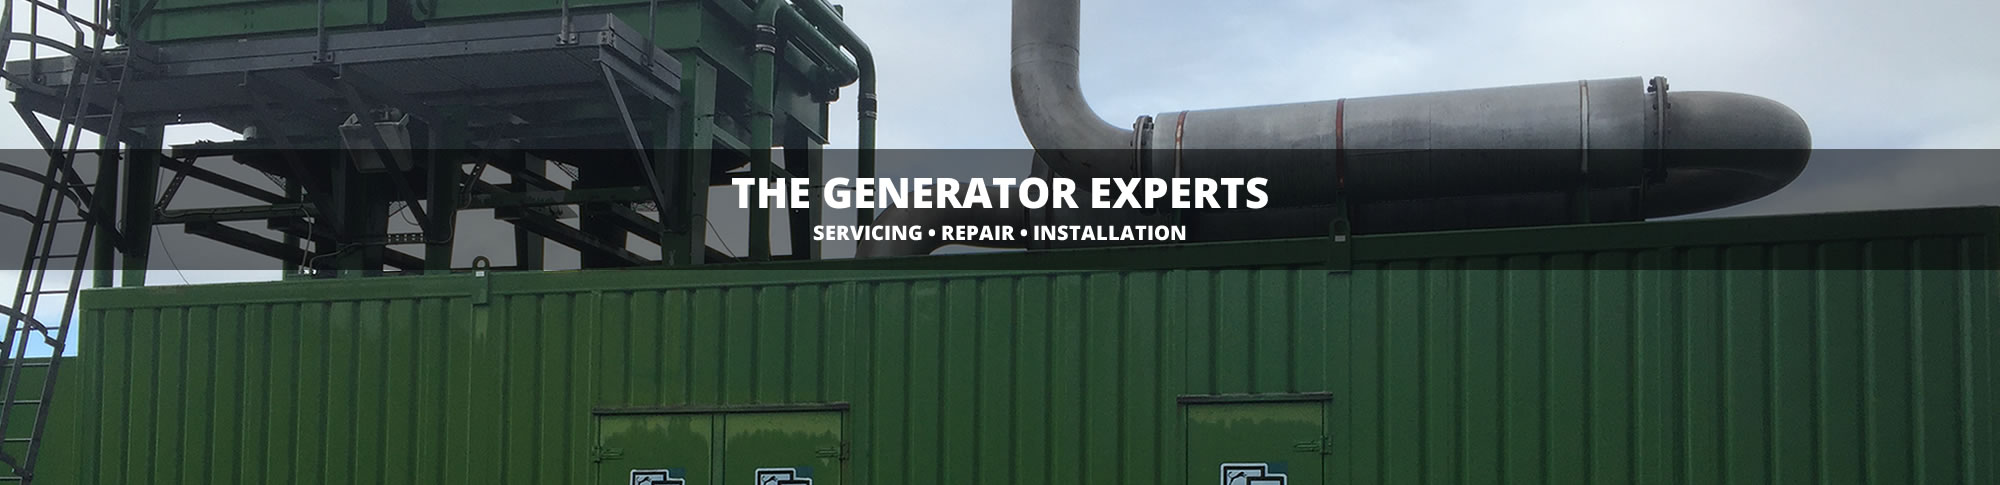 The Generator Experts, Servicing, Repair, Installation